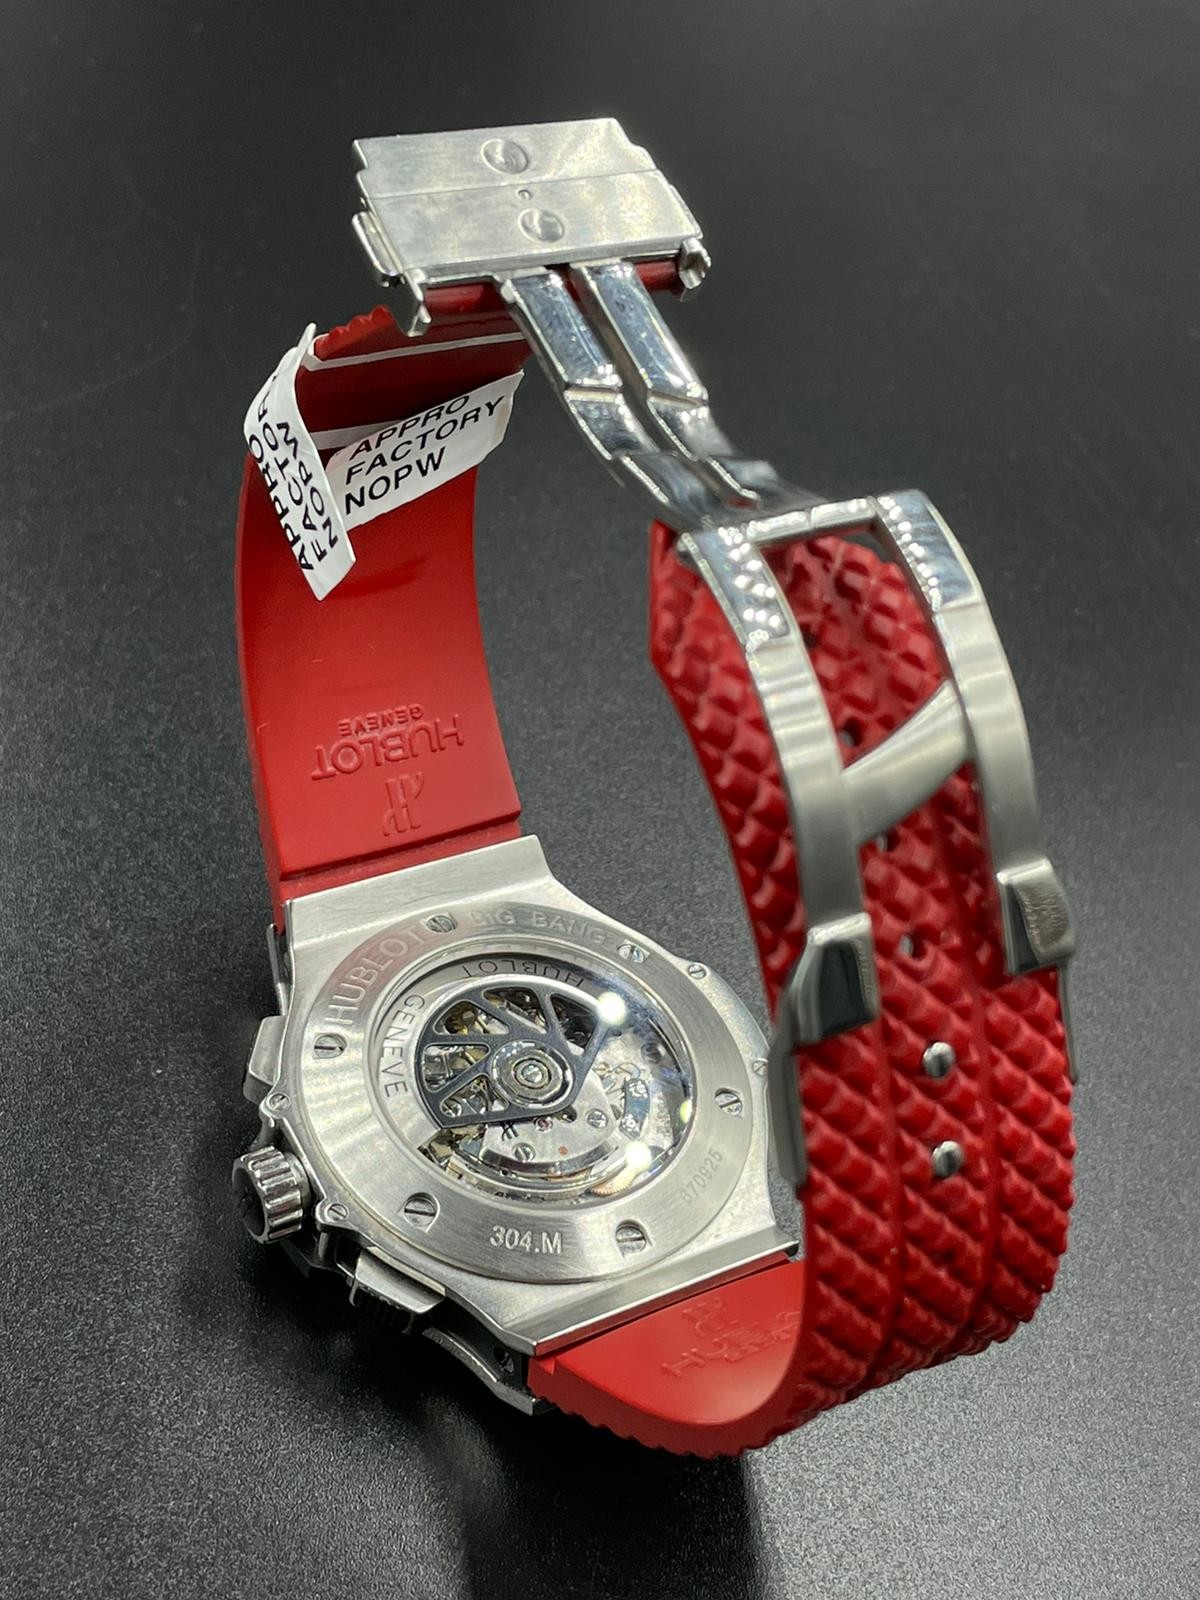 Hublot Big Bang chronometer watch with black face and original diamond dial - Image 3 of 5